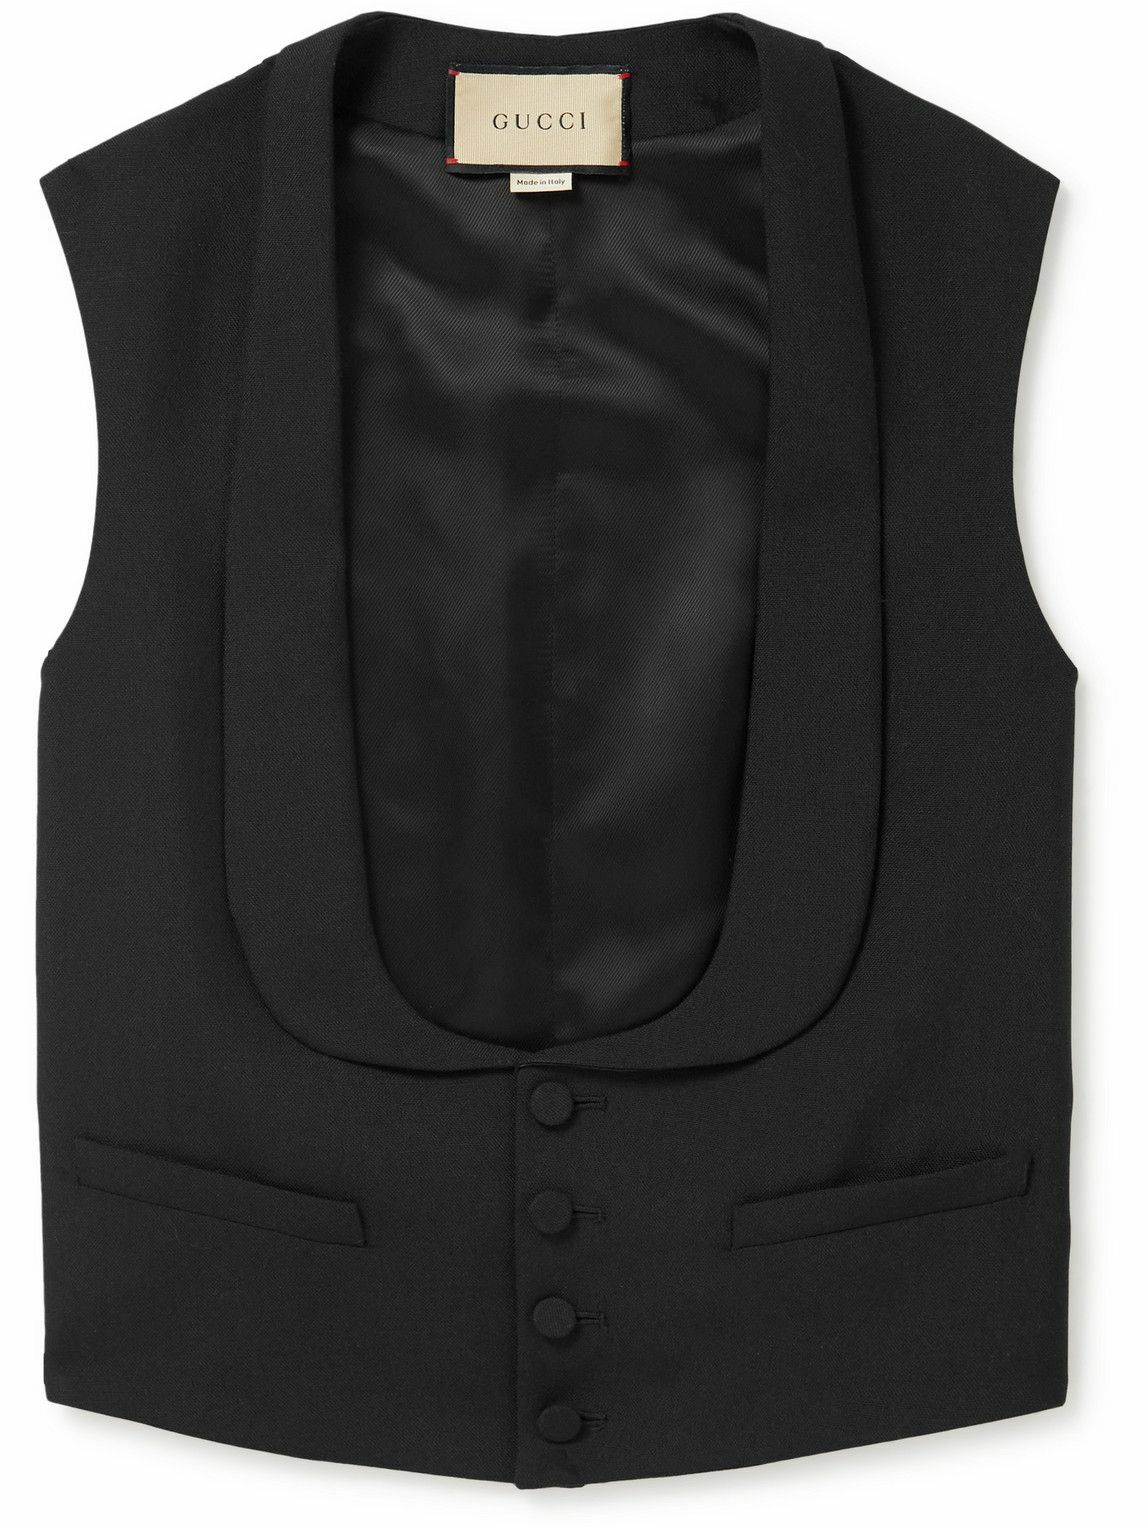 GUCCI - Shawl-Collar Wool and Mohair-Blend Waistcoat - Black Gucci